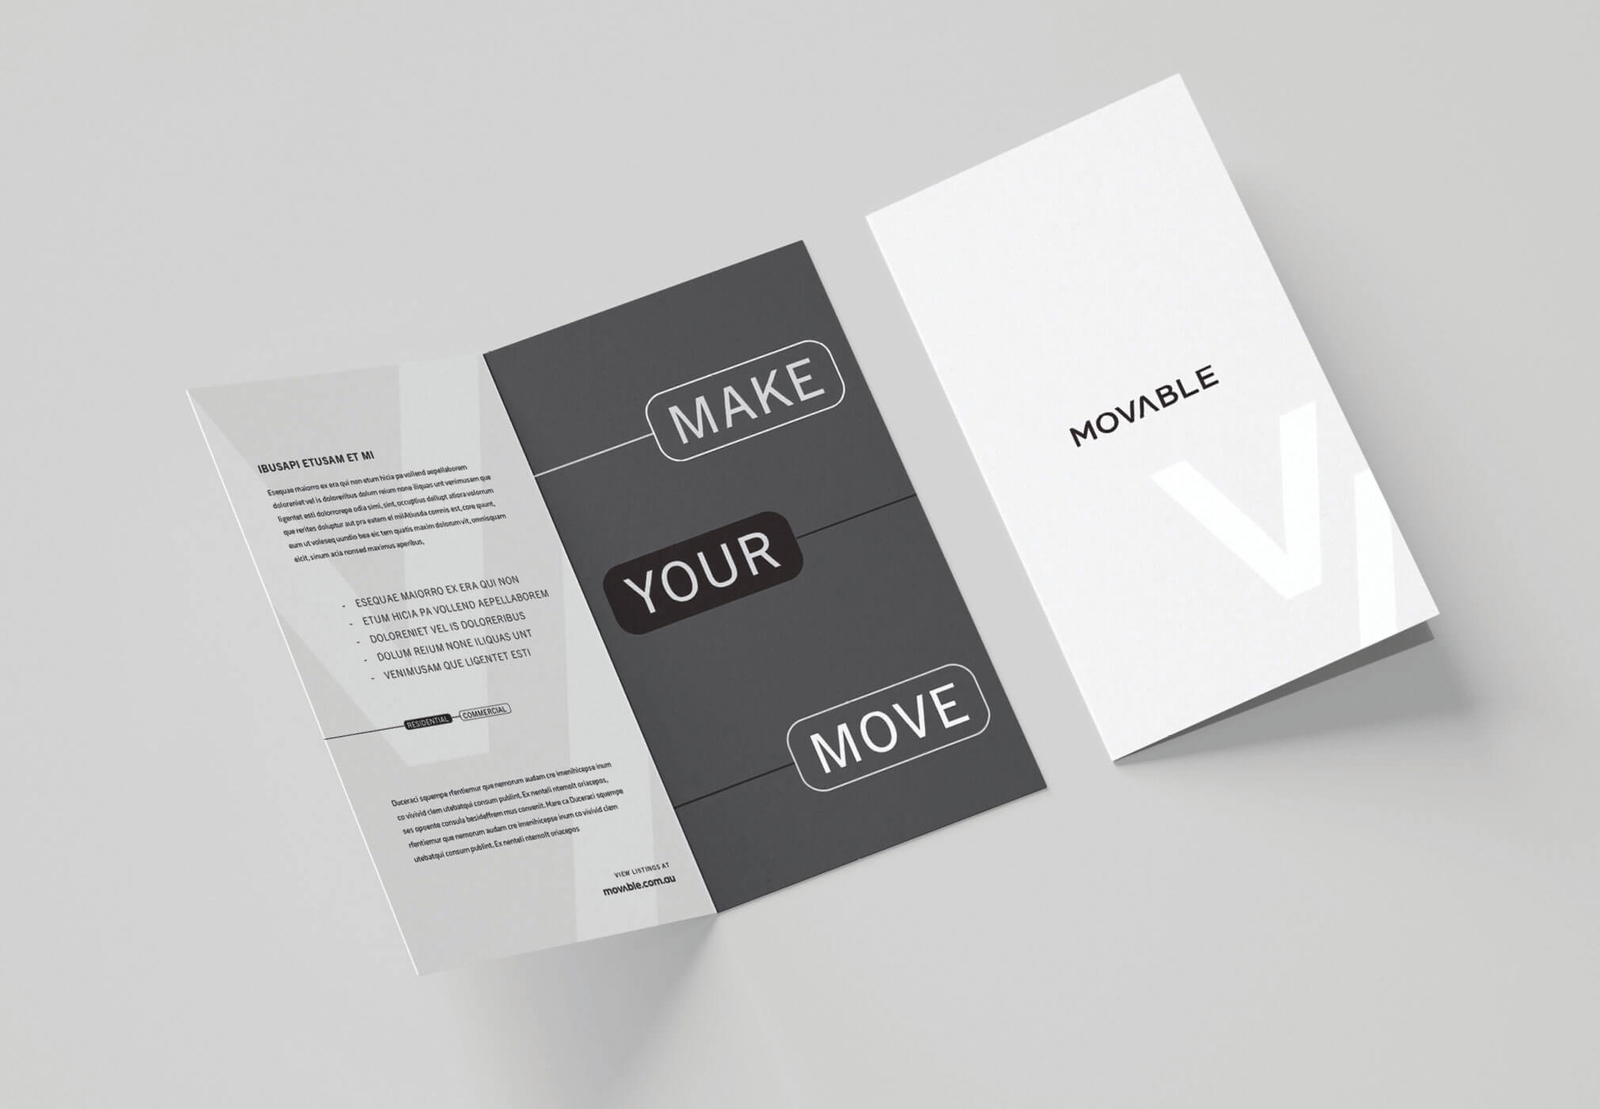 Movable - Brand and Website - Real Estate Trifold Brochure Design | Atollon - a design company